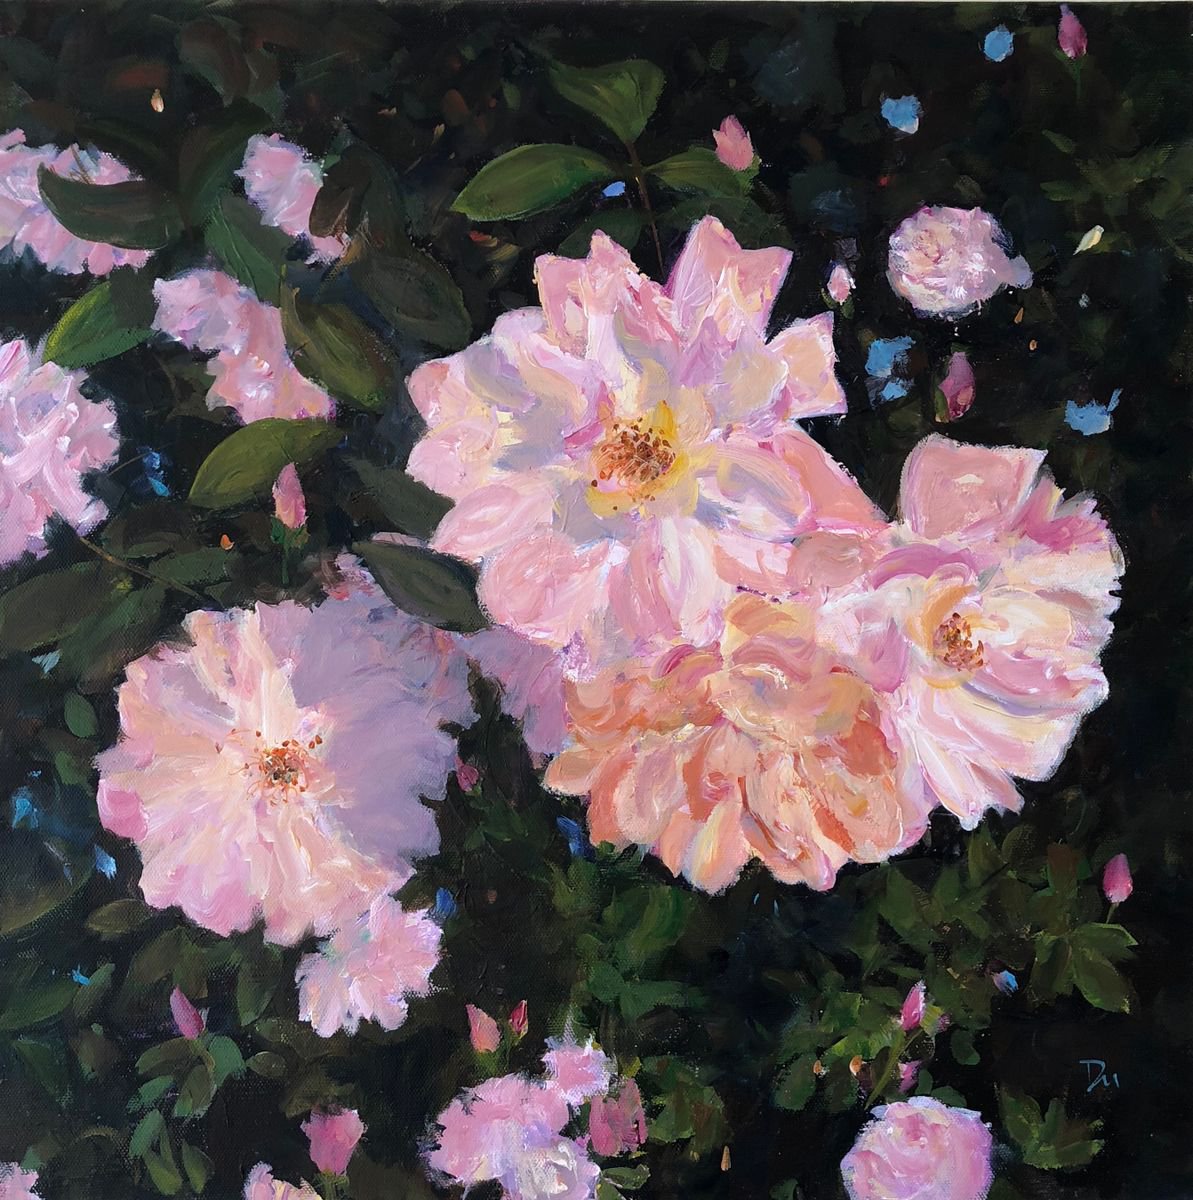 Rose garden by Shelly Du